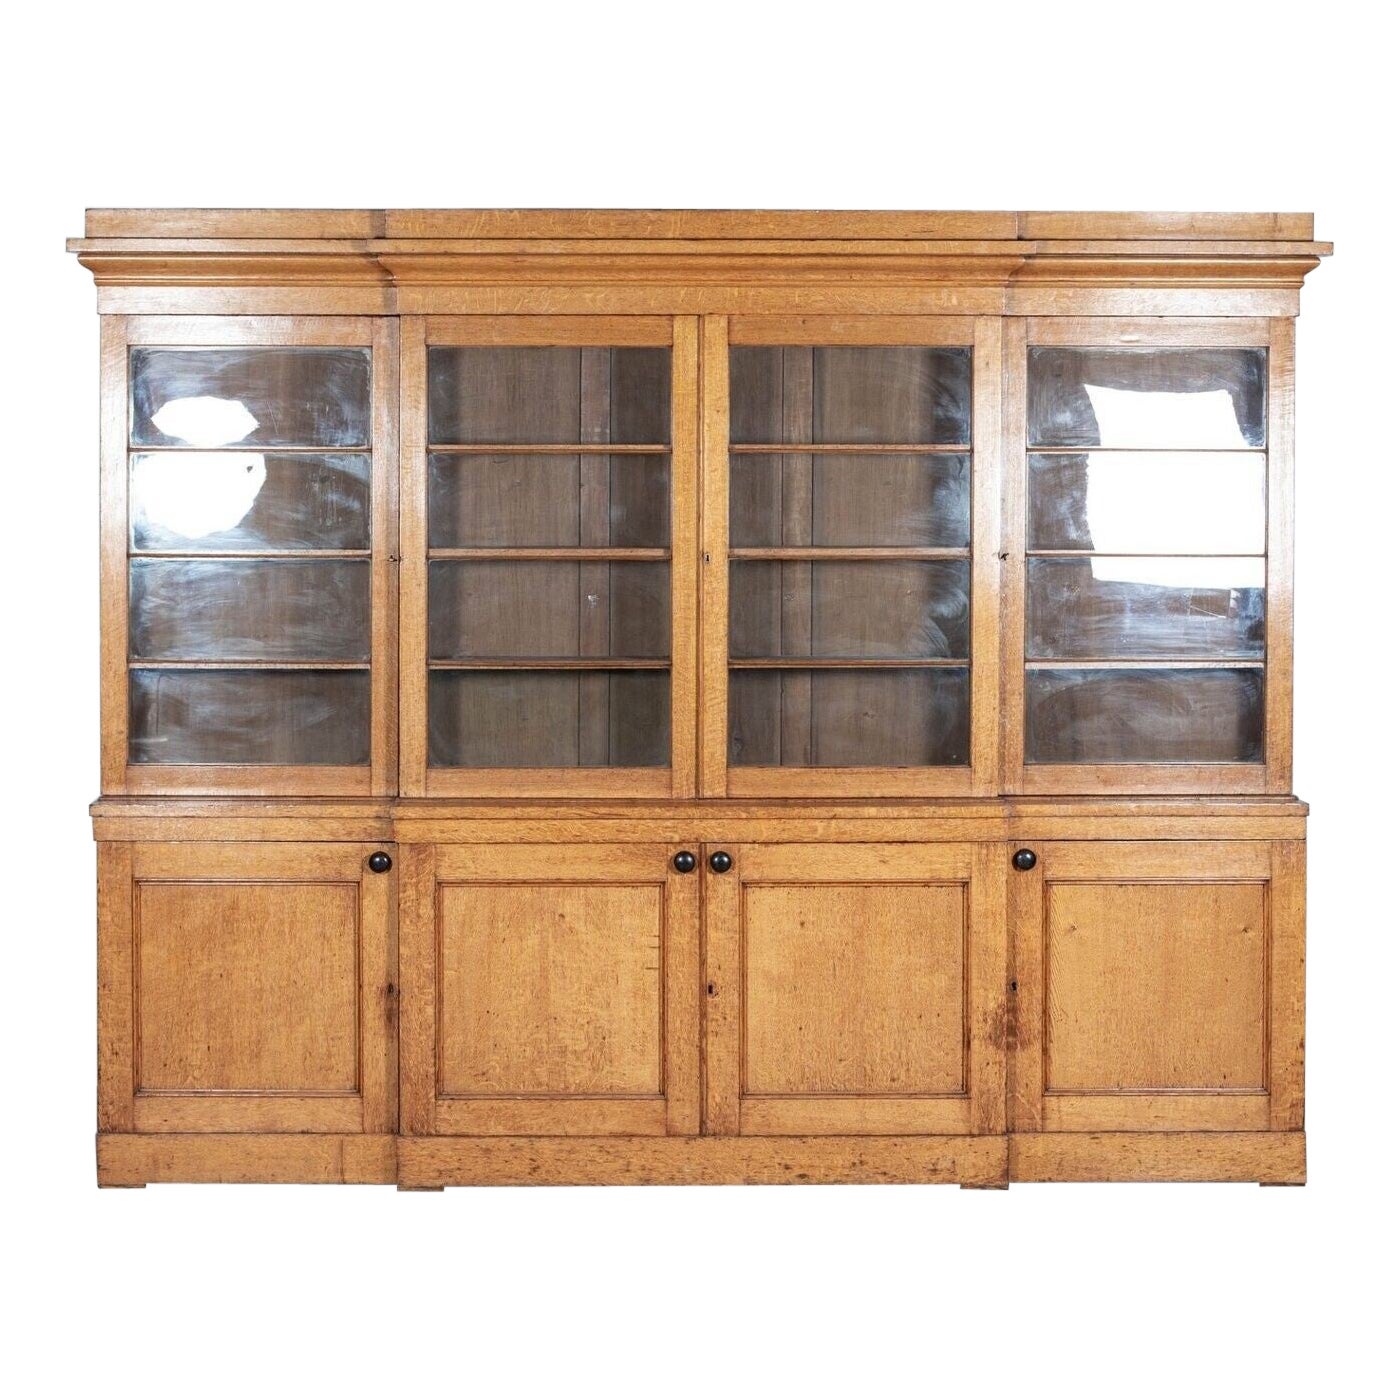 Monumental 19thC English Glazed Oak Breakfront Bookcase